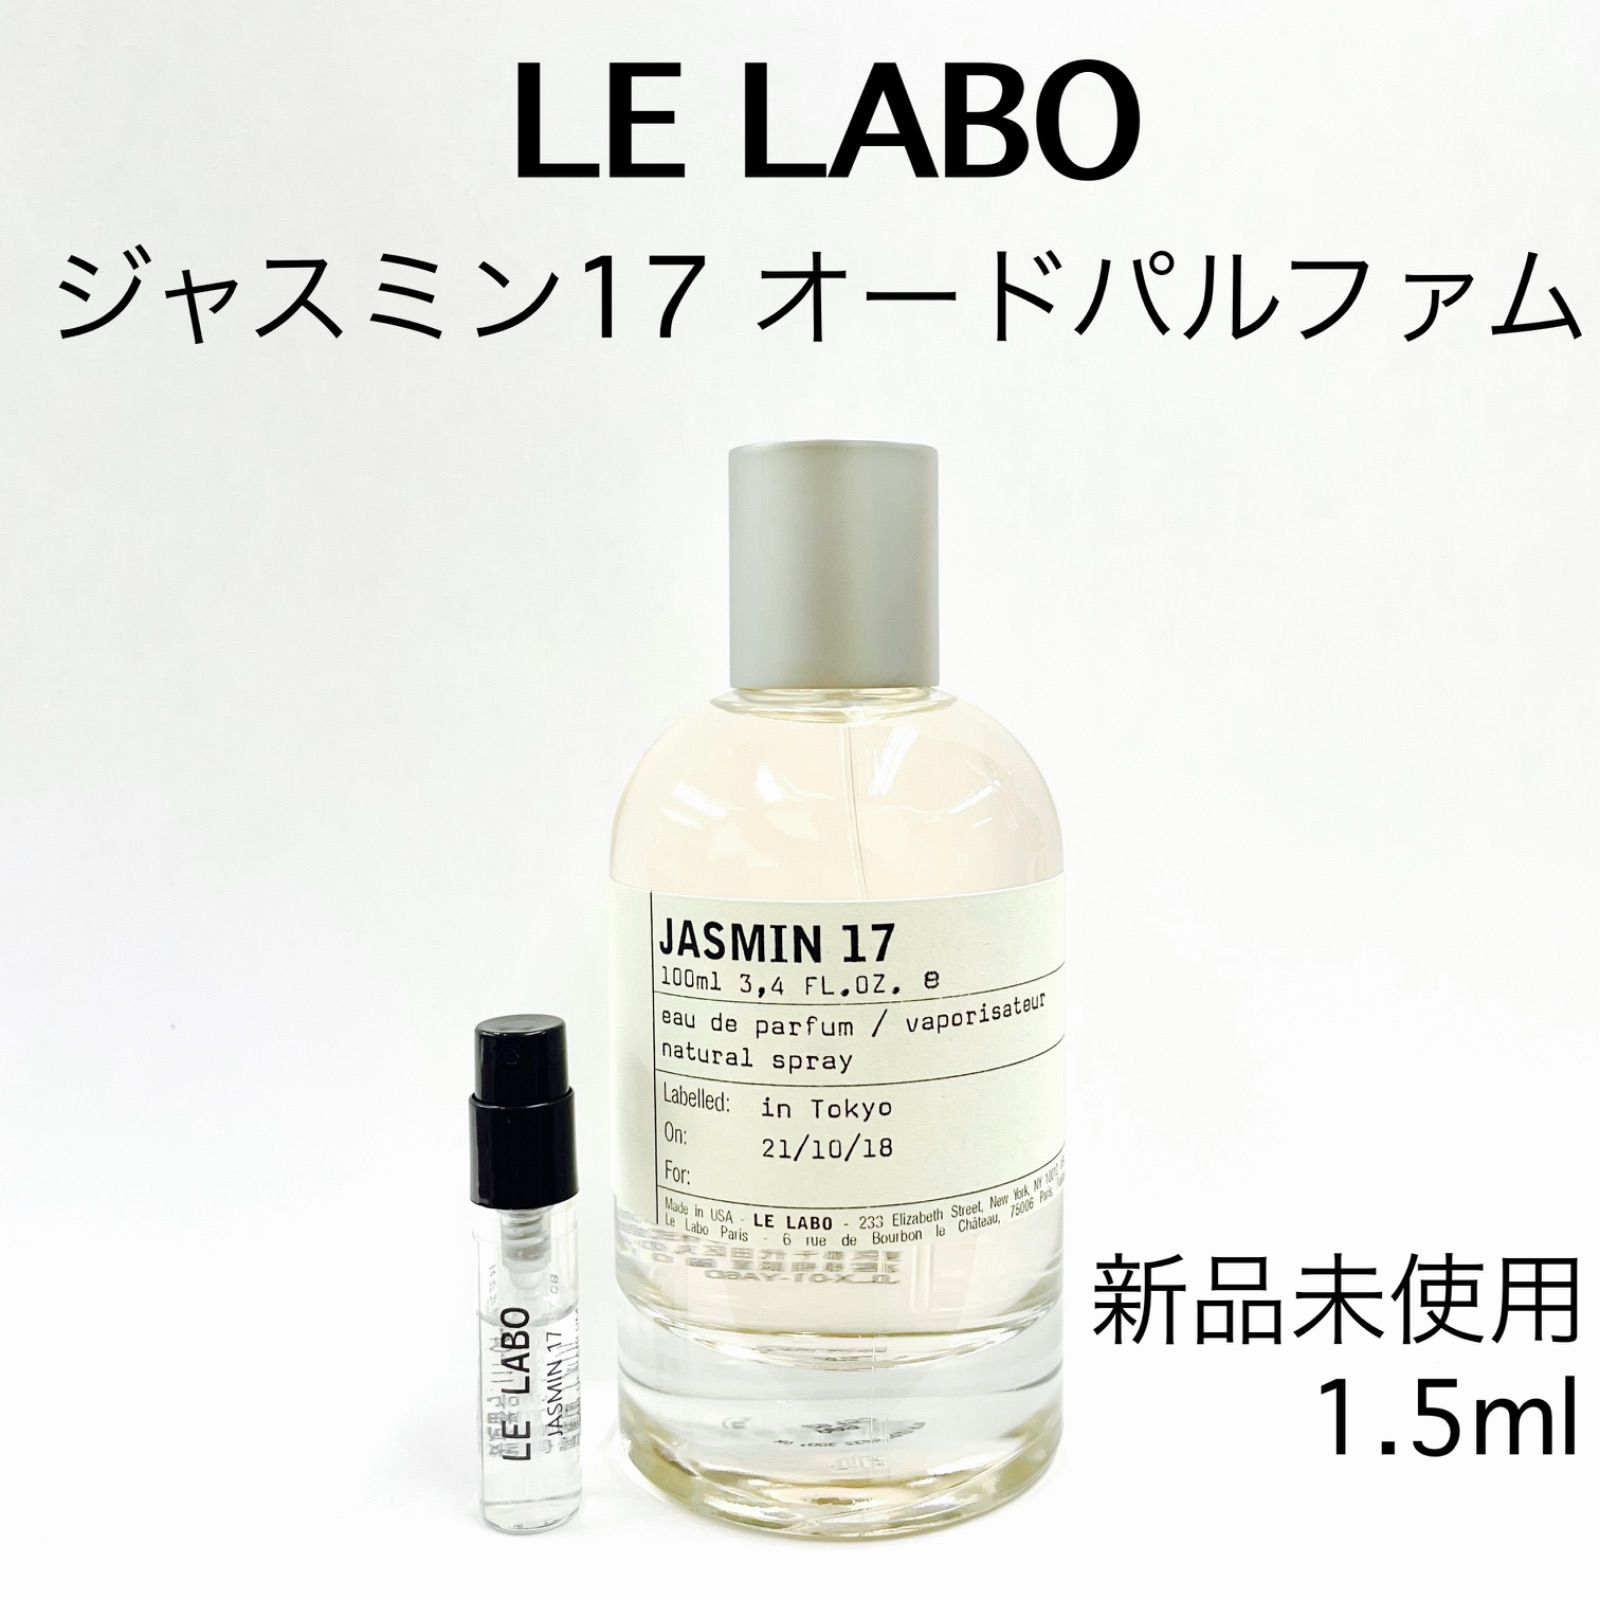 LELABO ルラボ ジャスミン17 香水 1.5ml 最短即日発送